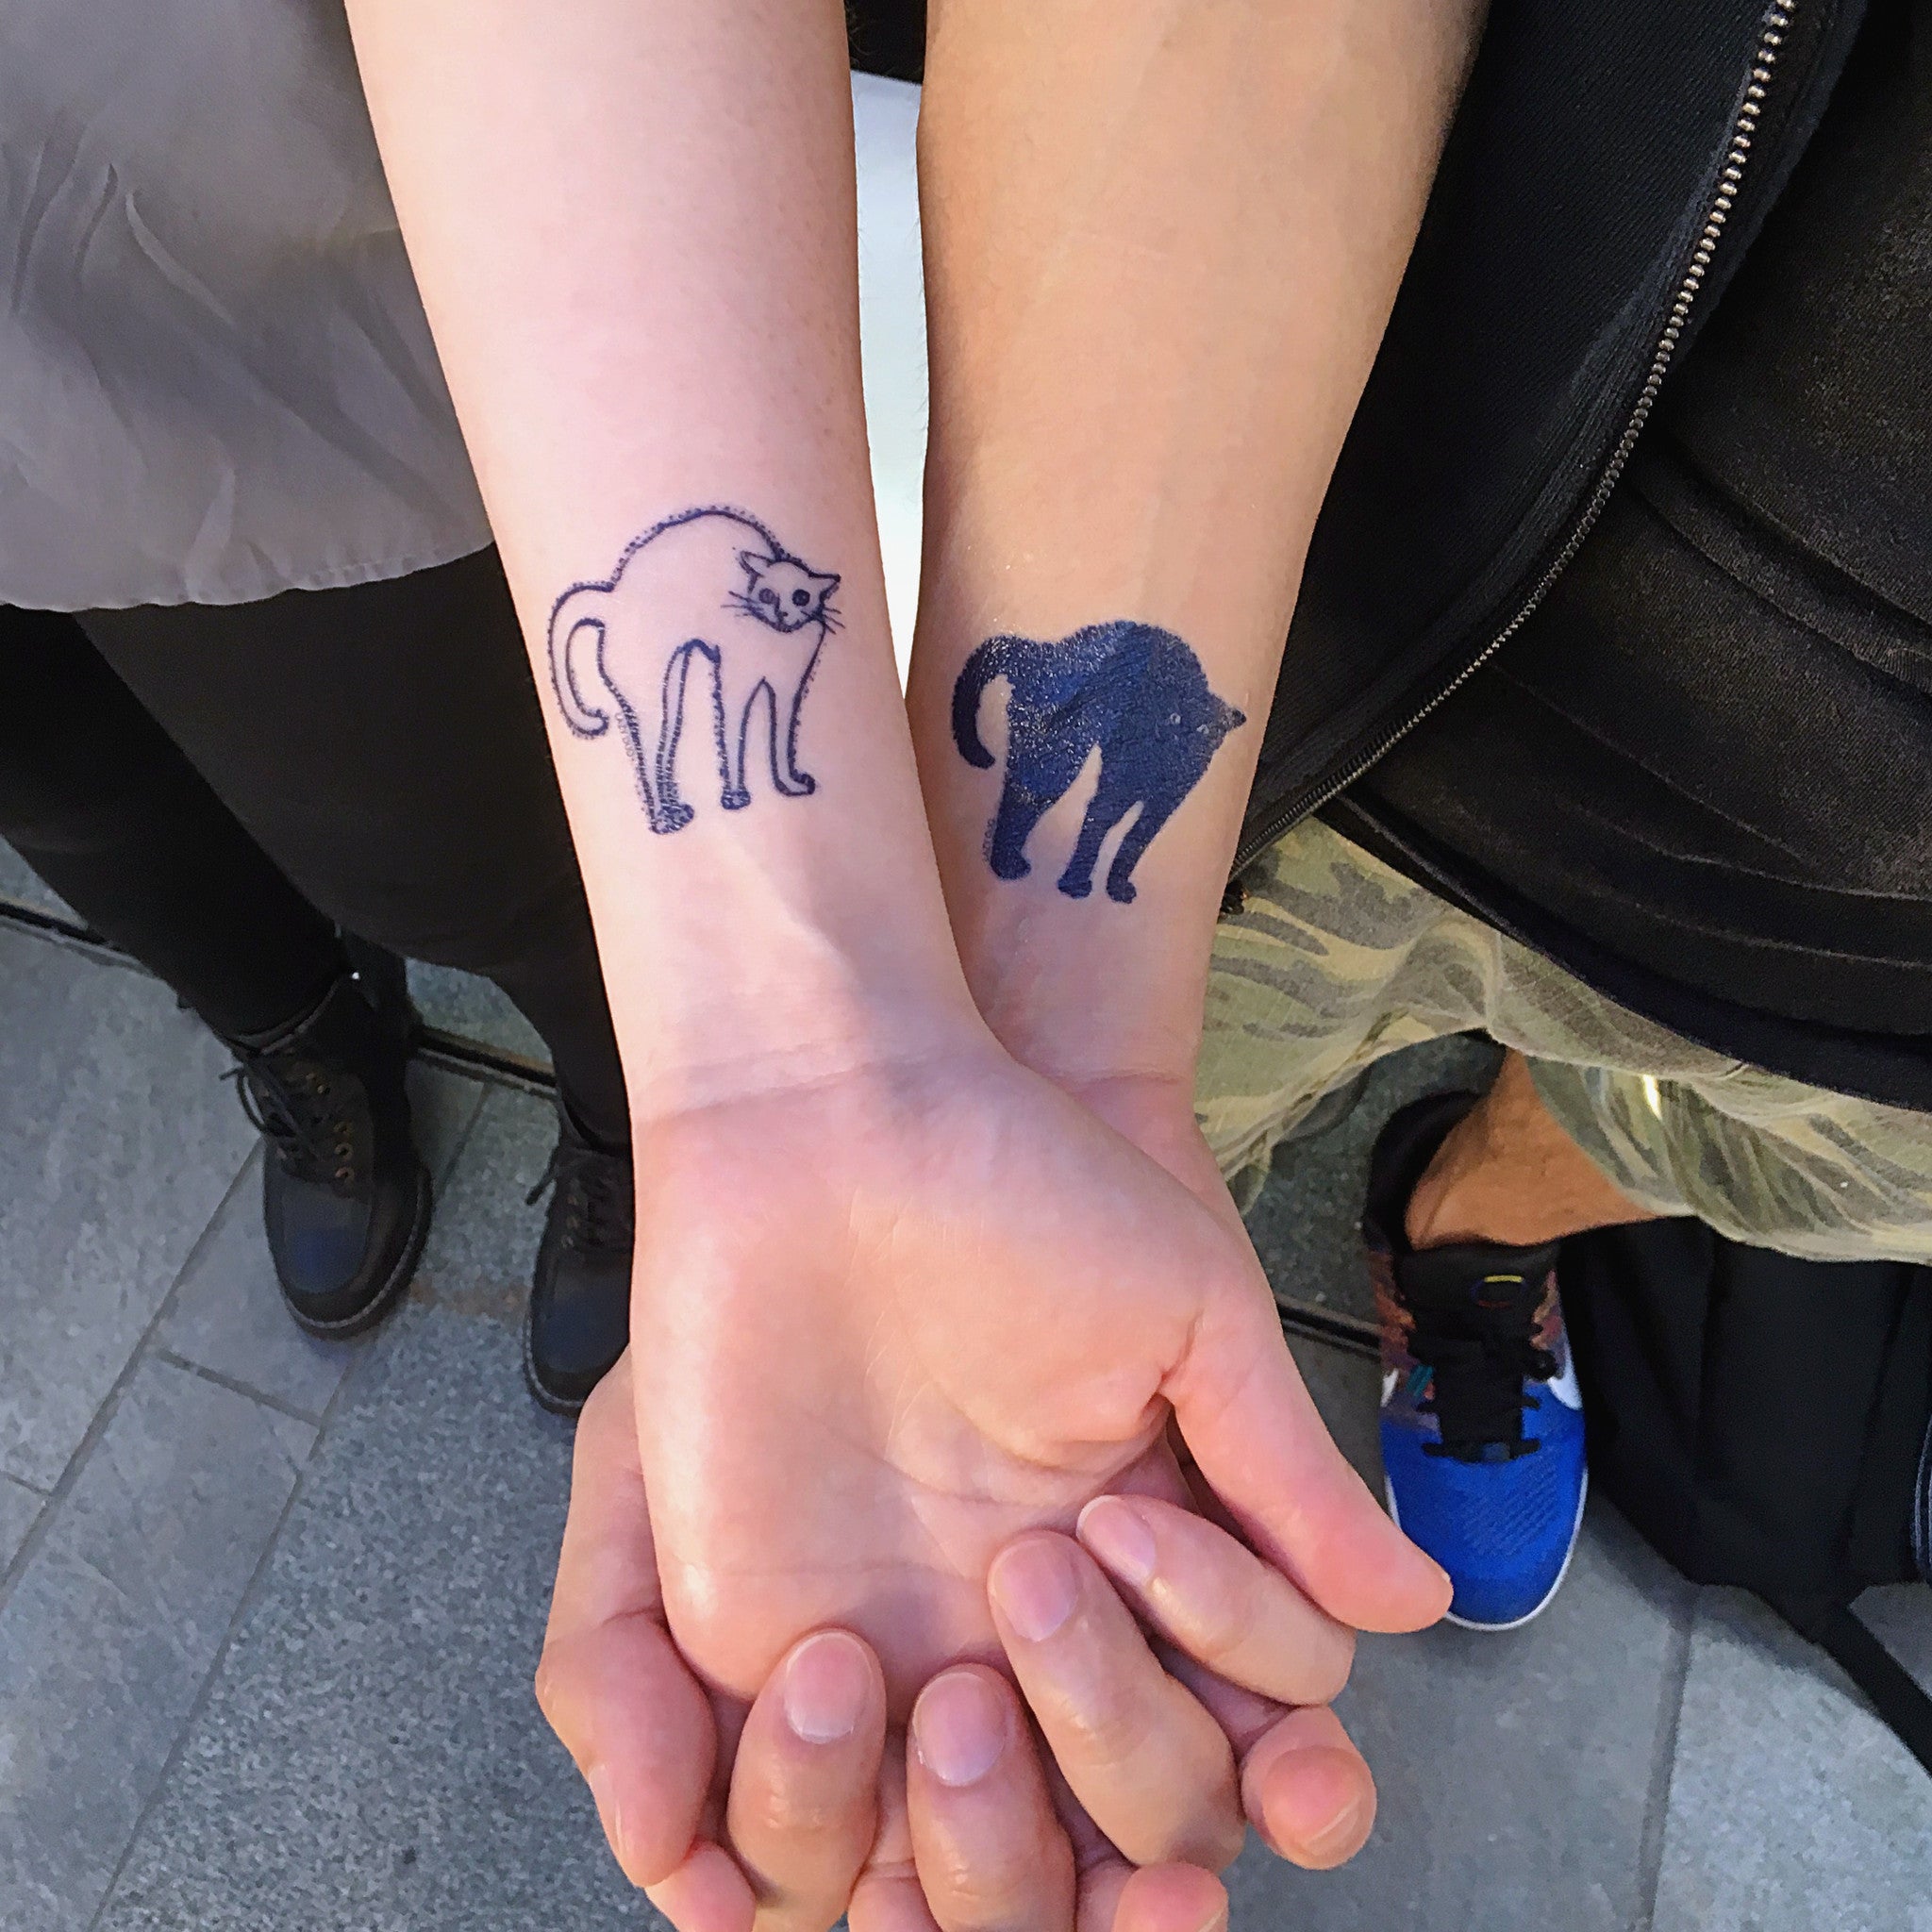 LOTR Fan Art Temporary Tattoo Sticker - OhMyTat